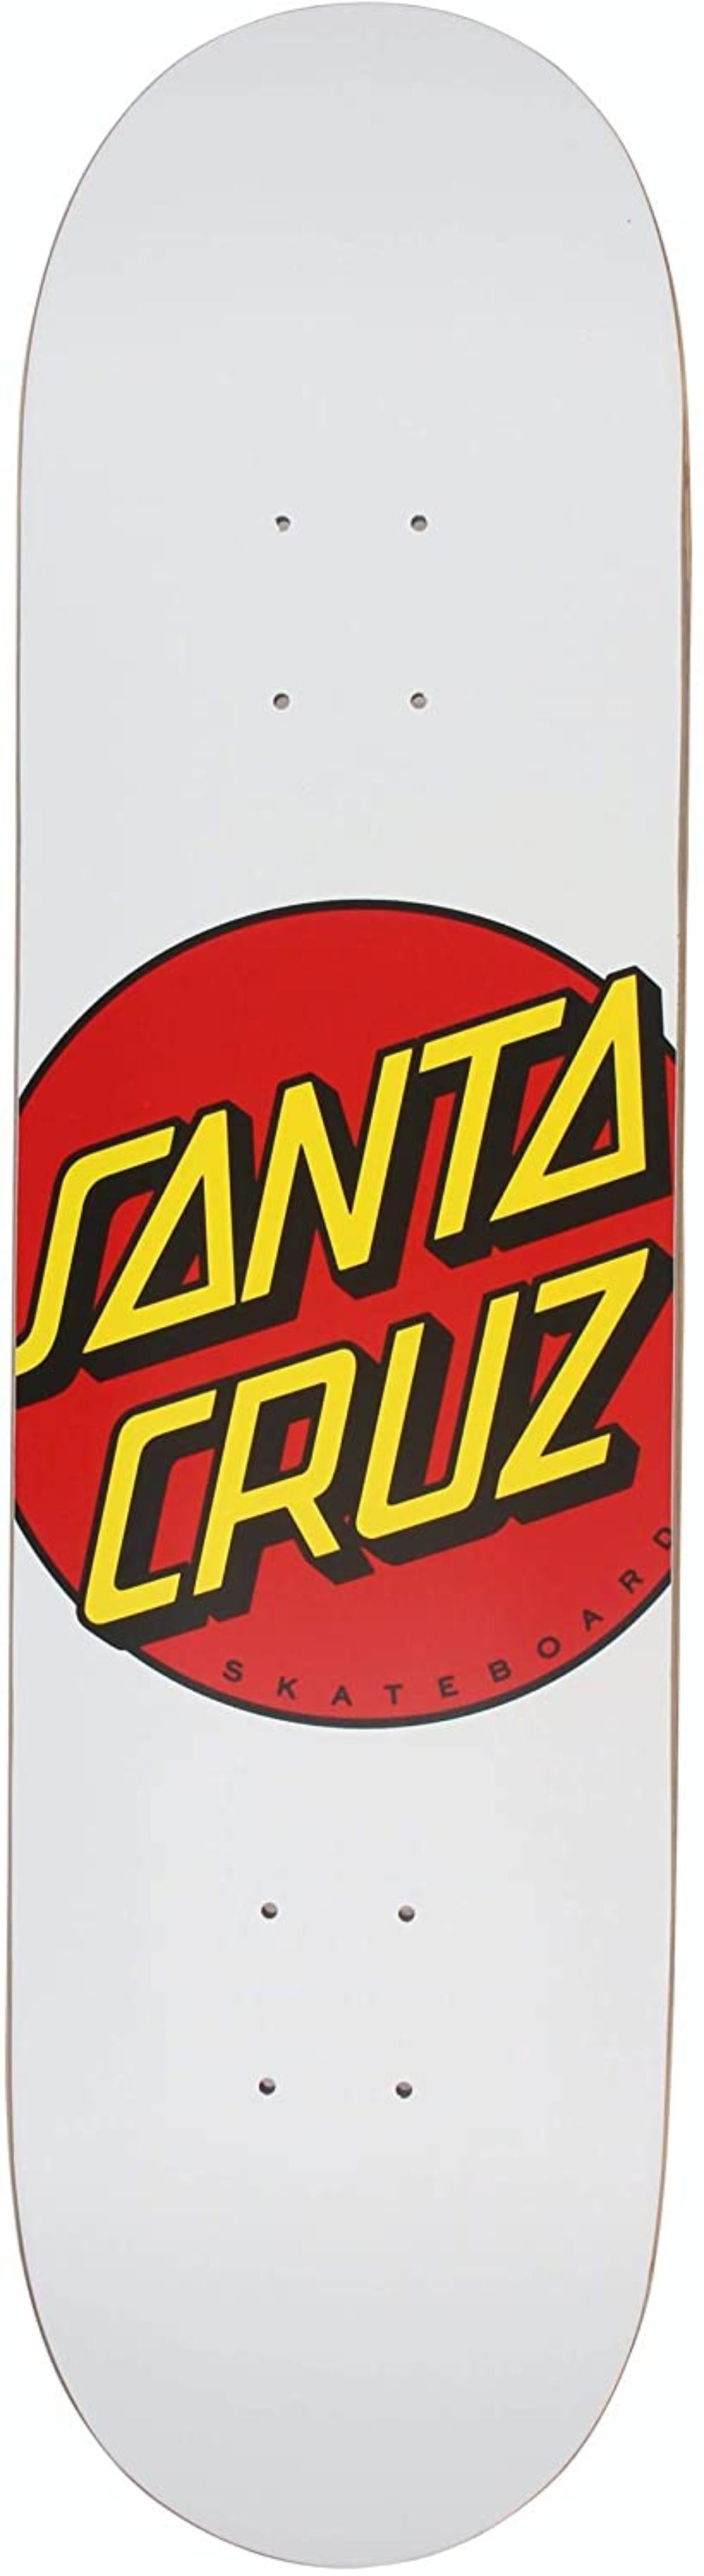 Santa Cruz Spiderman Skateboards Sticker Vinyl Phone Laptop Notebook Decal 